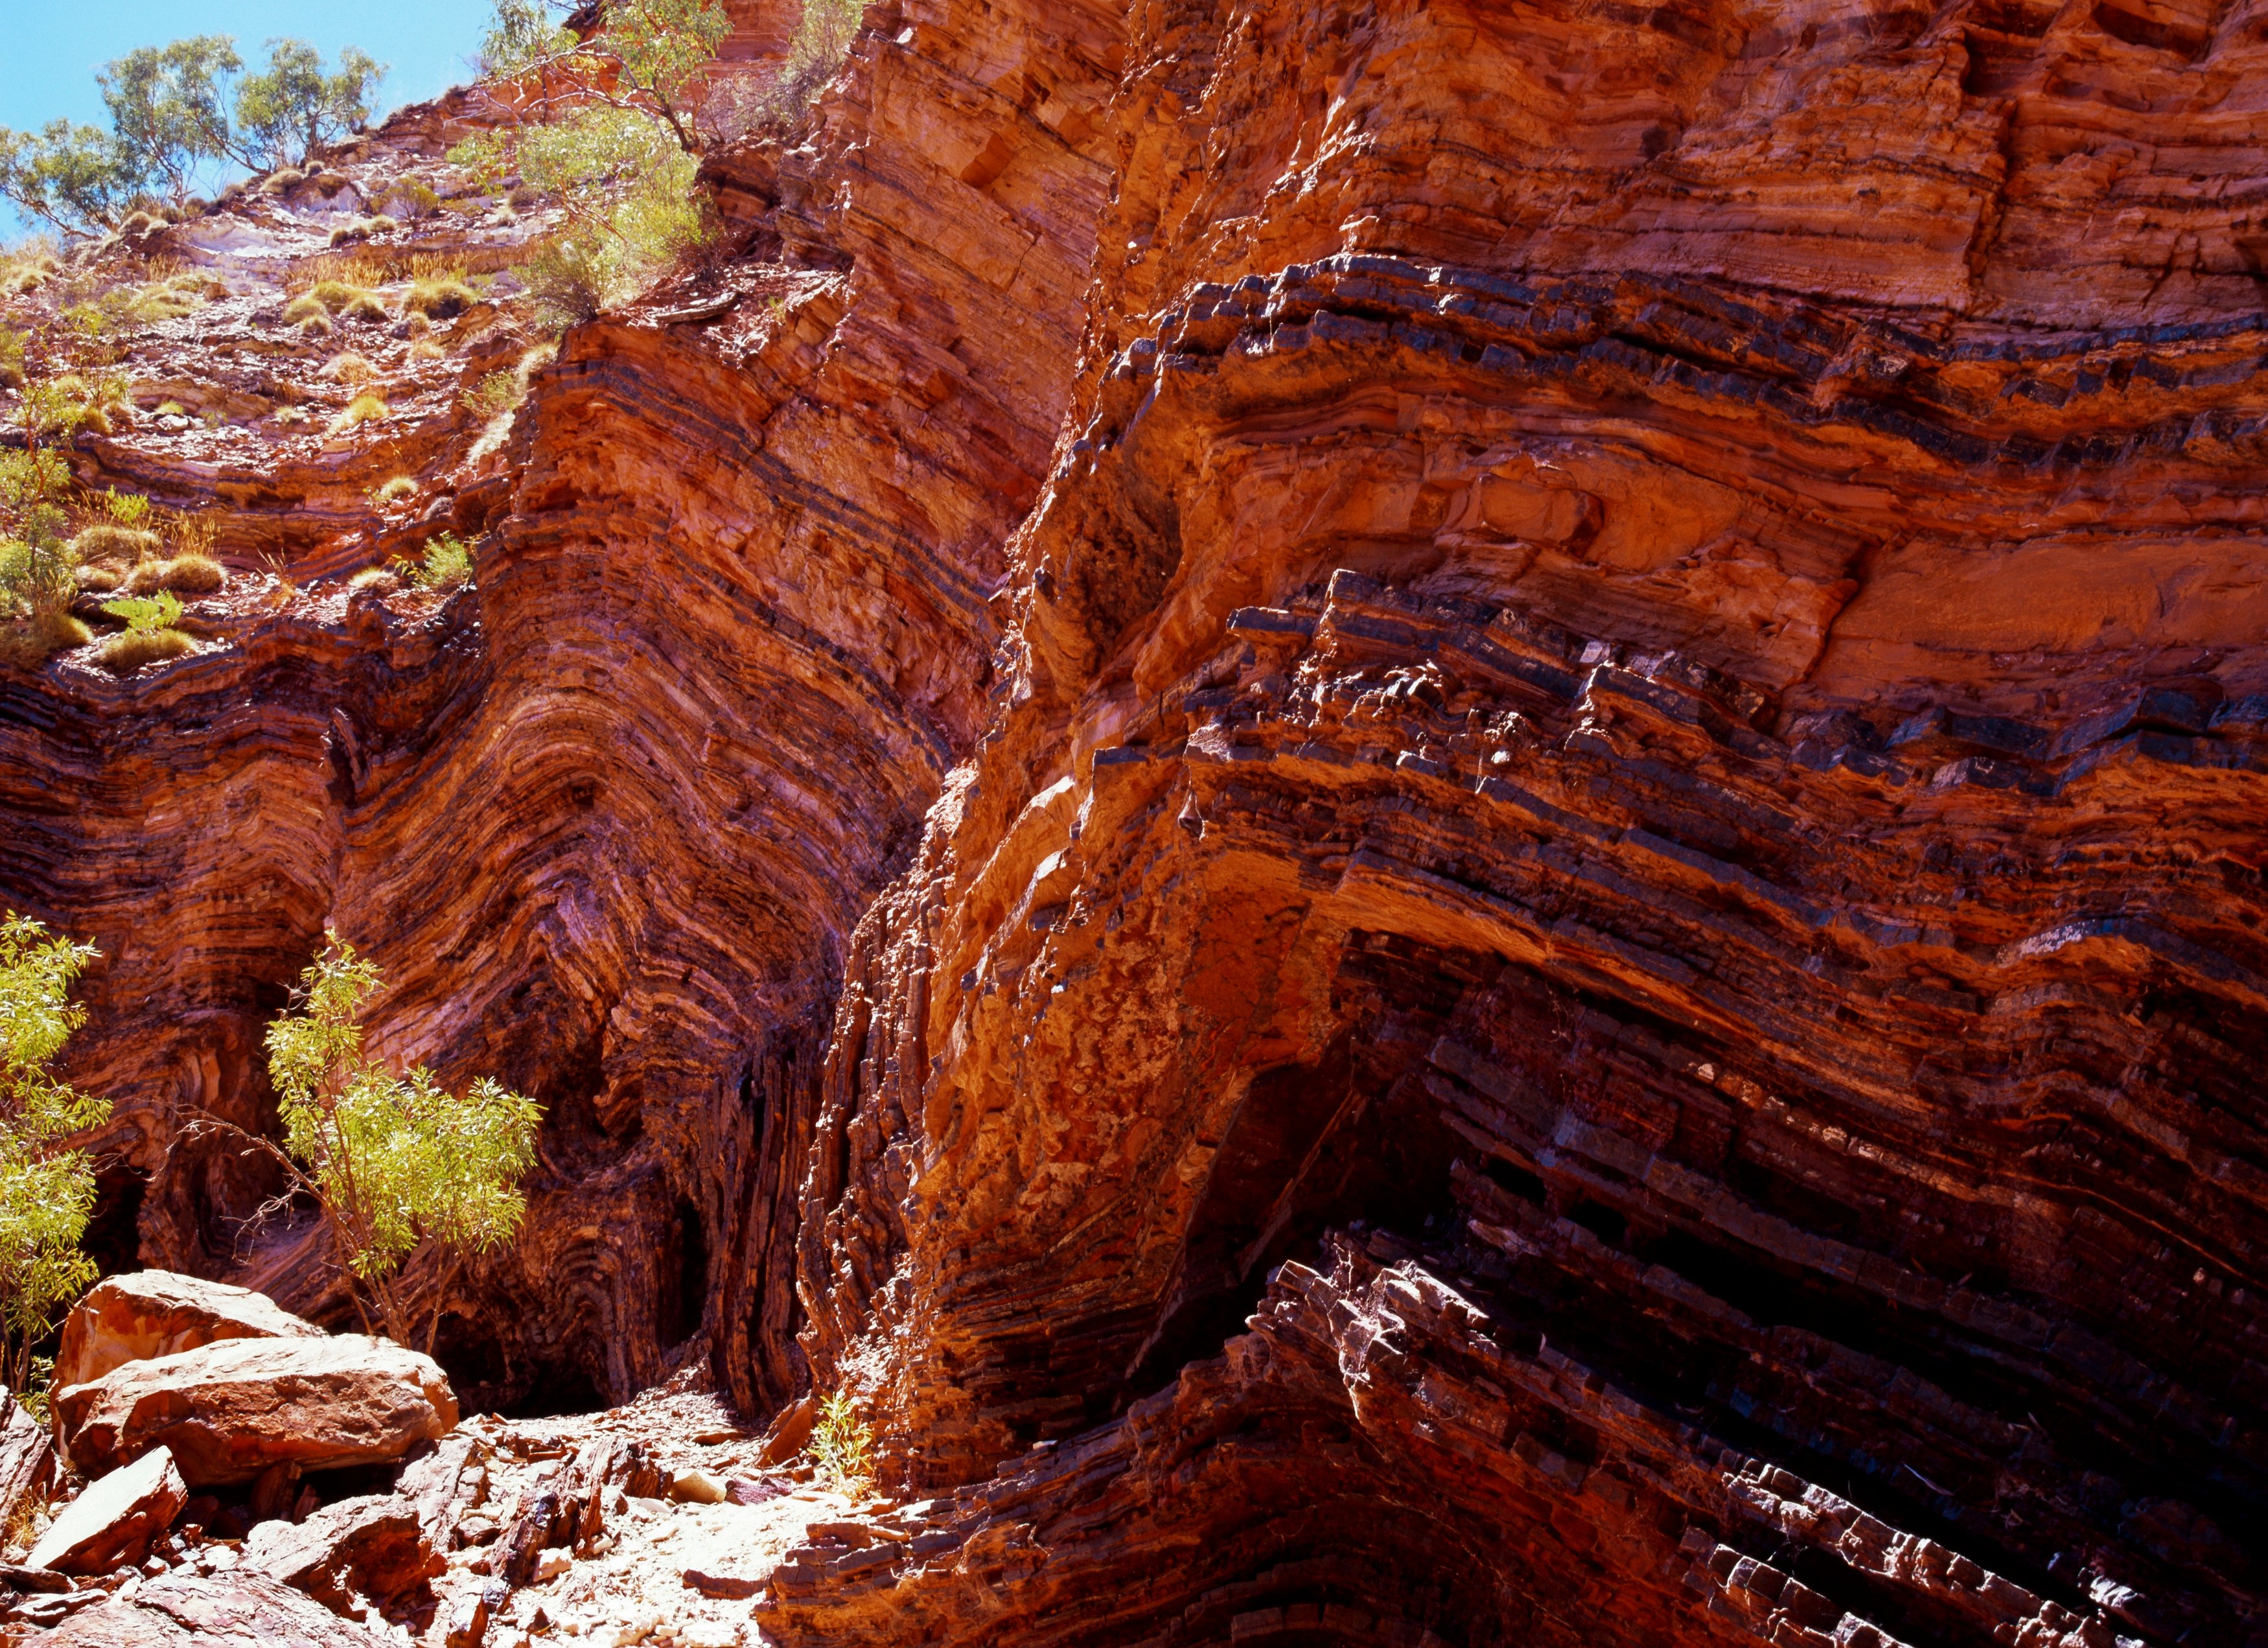 Western Australia - iron ore layers in rock face of Hamersley Gorge in Karijini national park, Pilbara